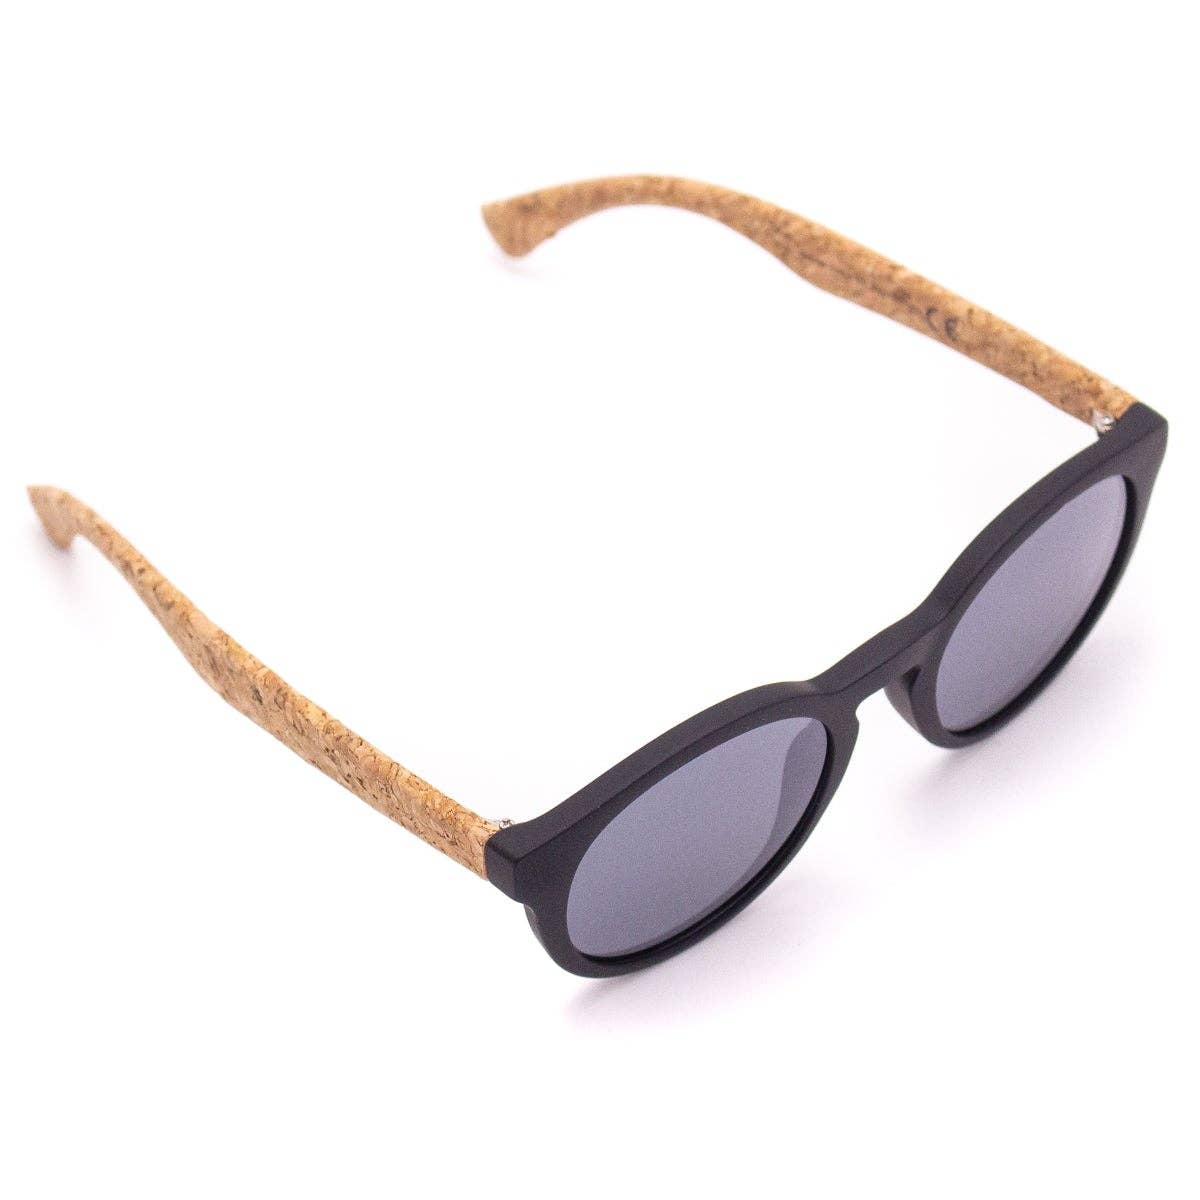 Vegan Cork Sunglasses for Women | THE CORK COLLECTION